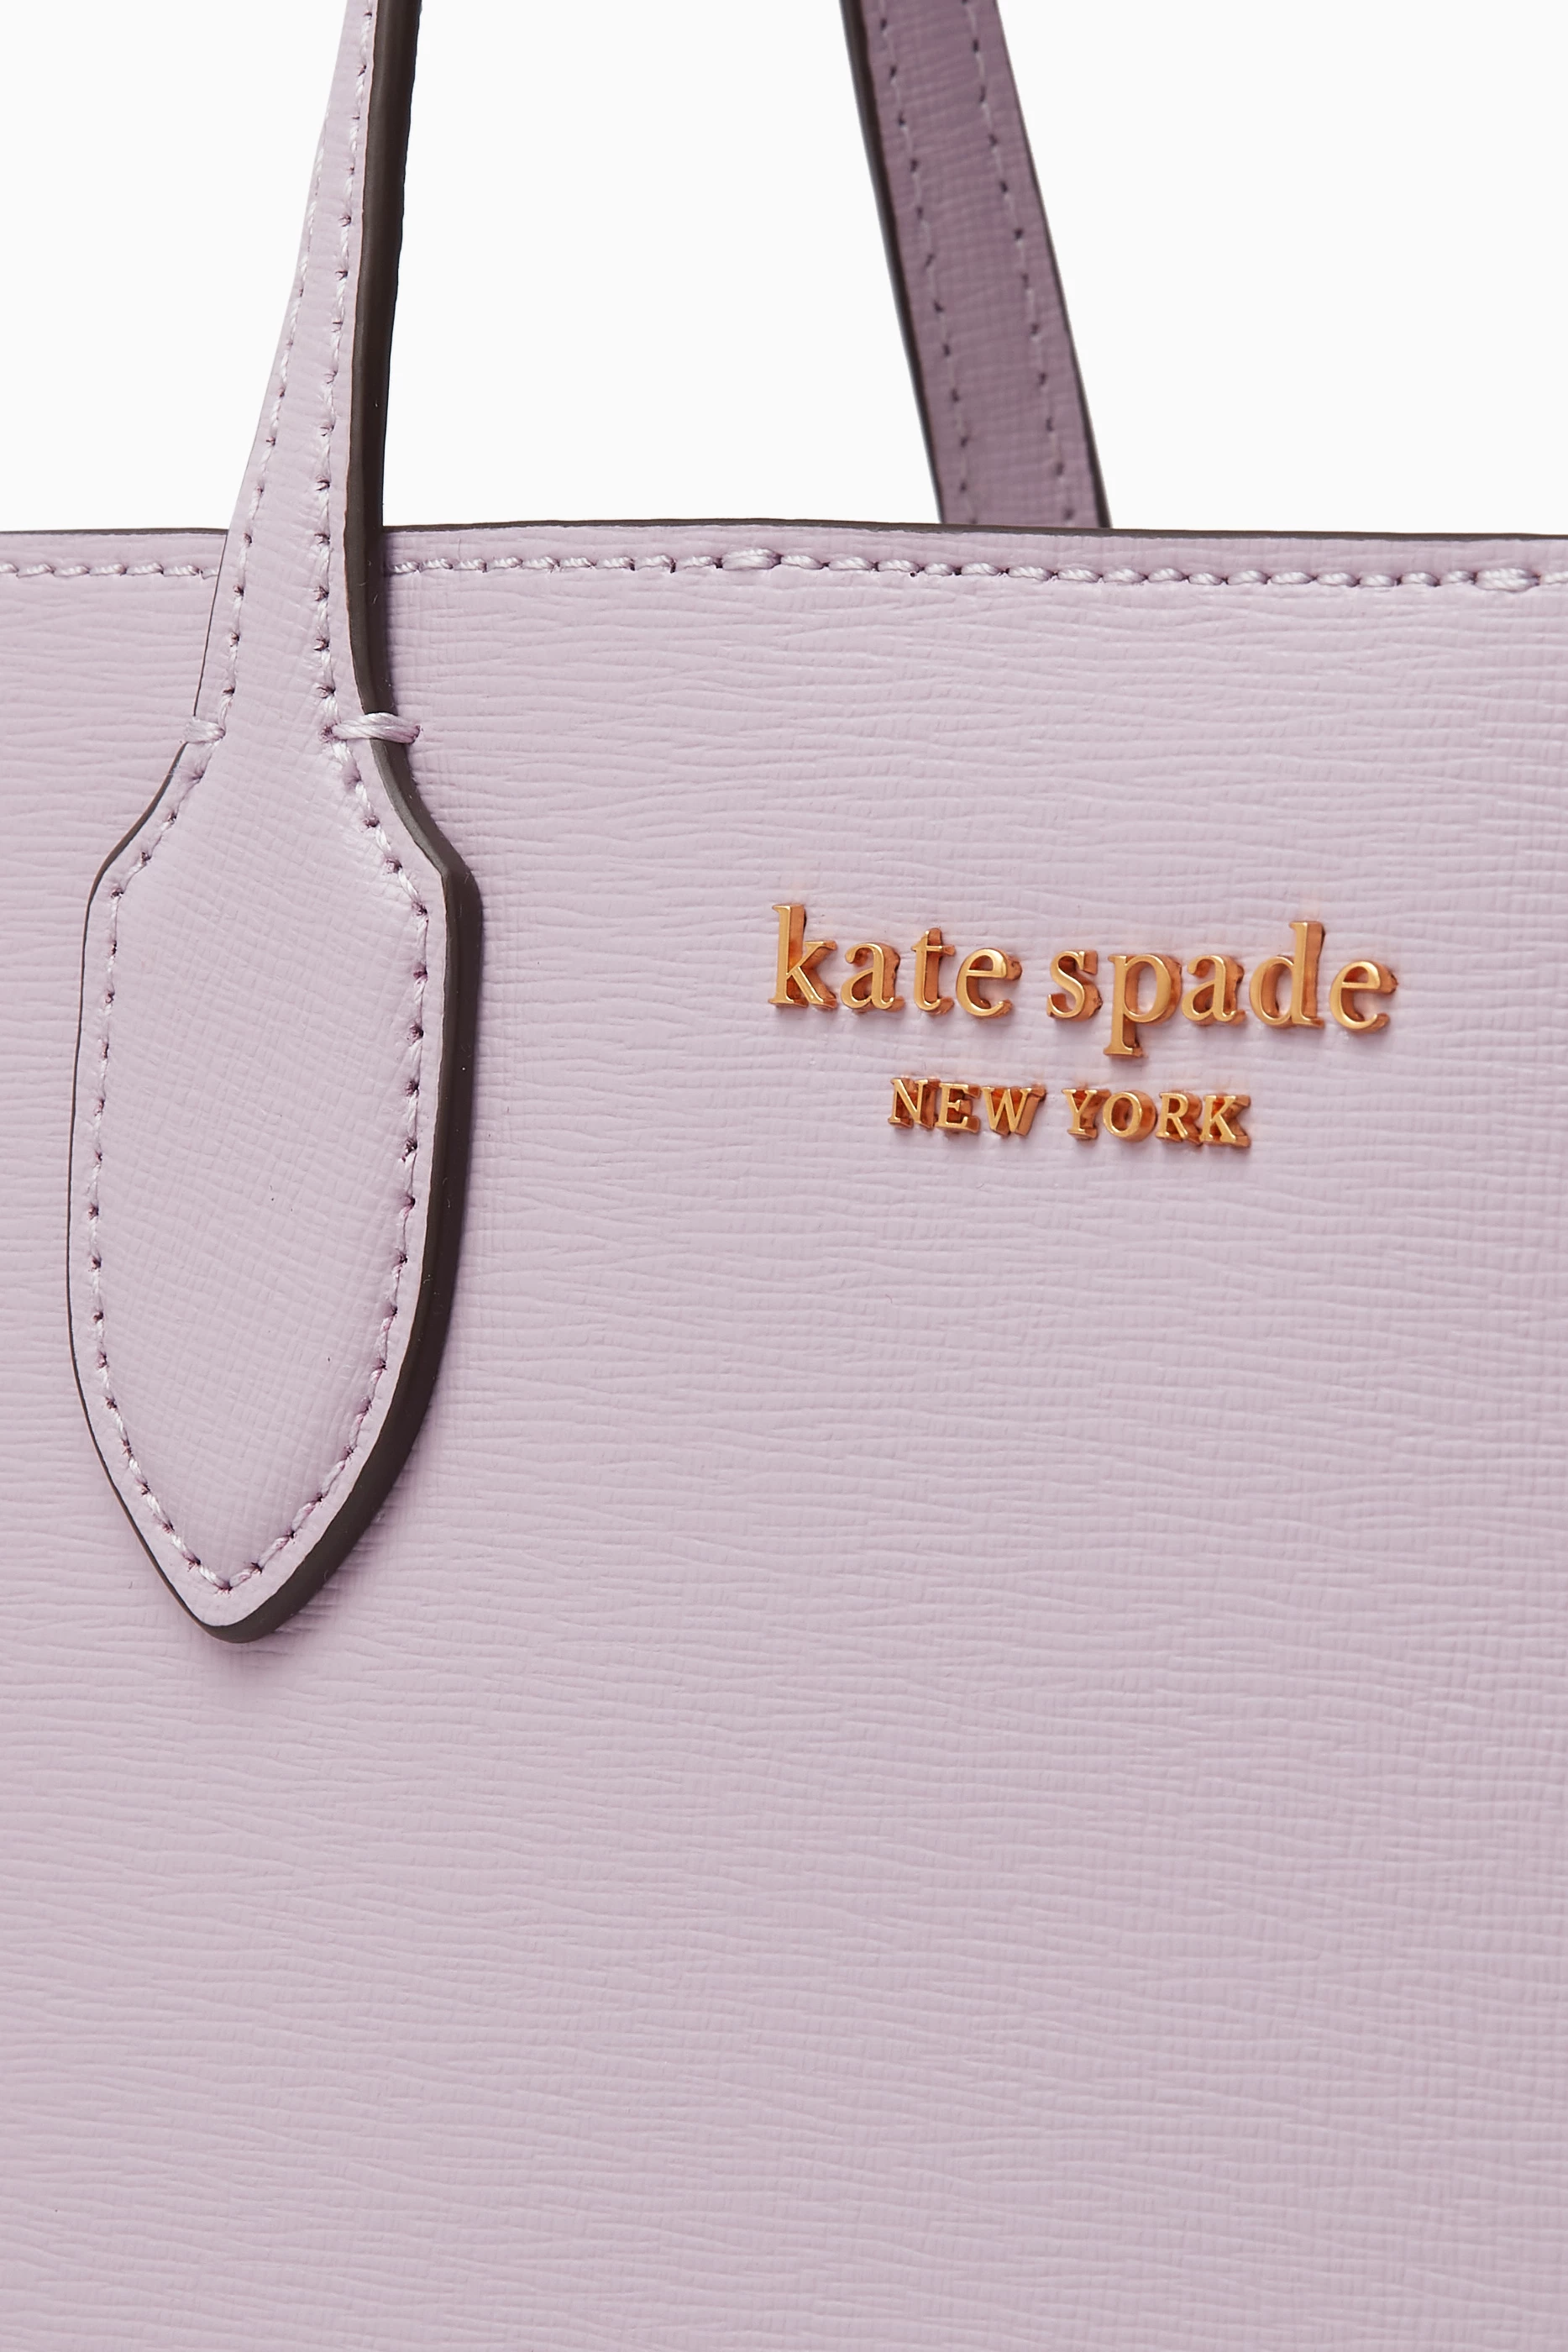 Kate Spade New York Bleecker Medium Crossbody Tote Bag - Violet Mist